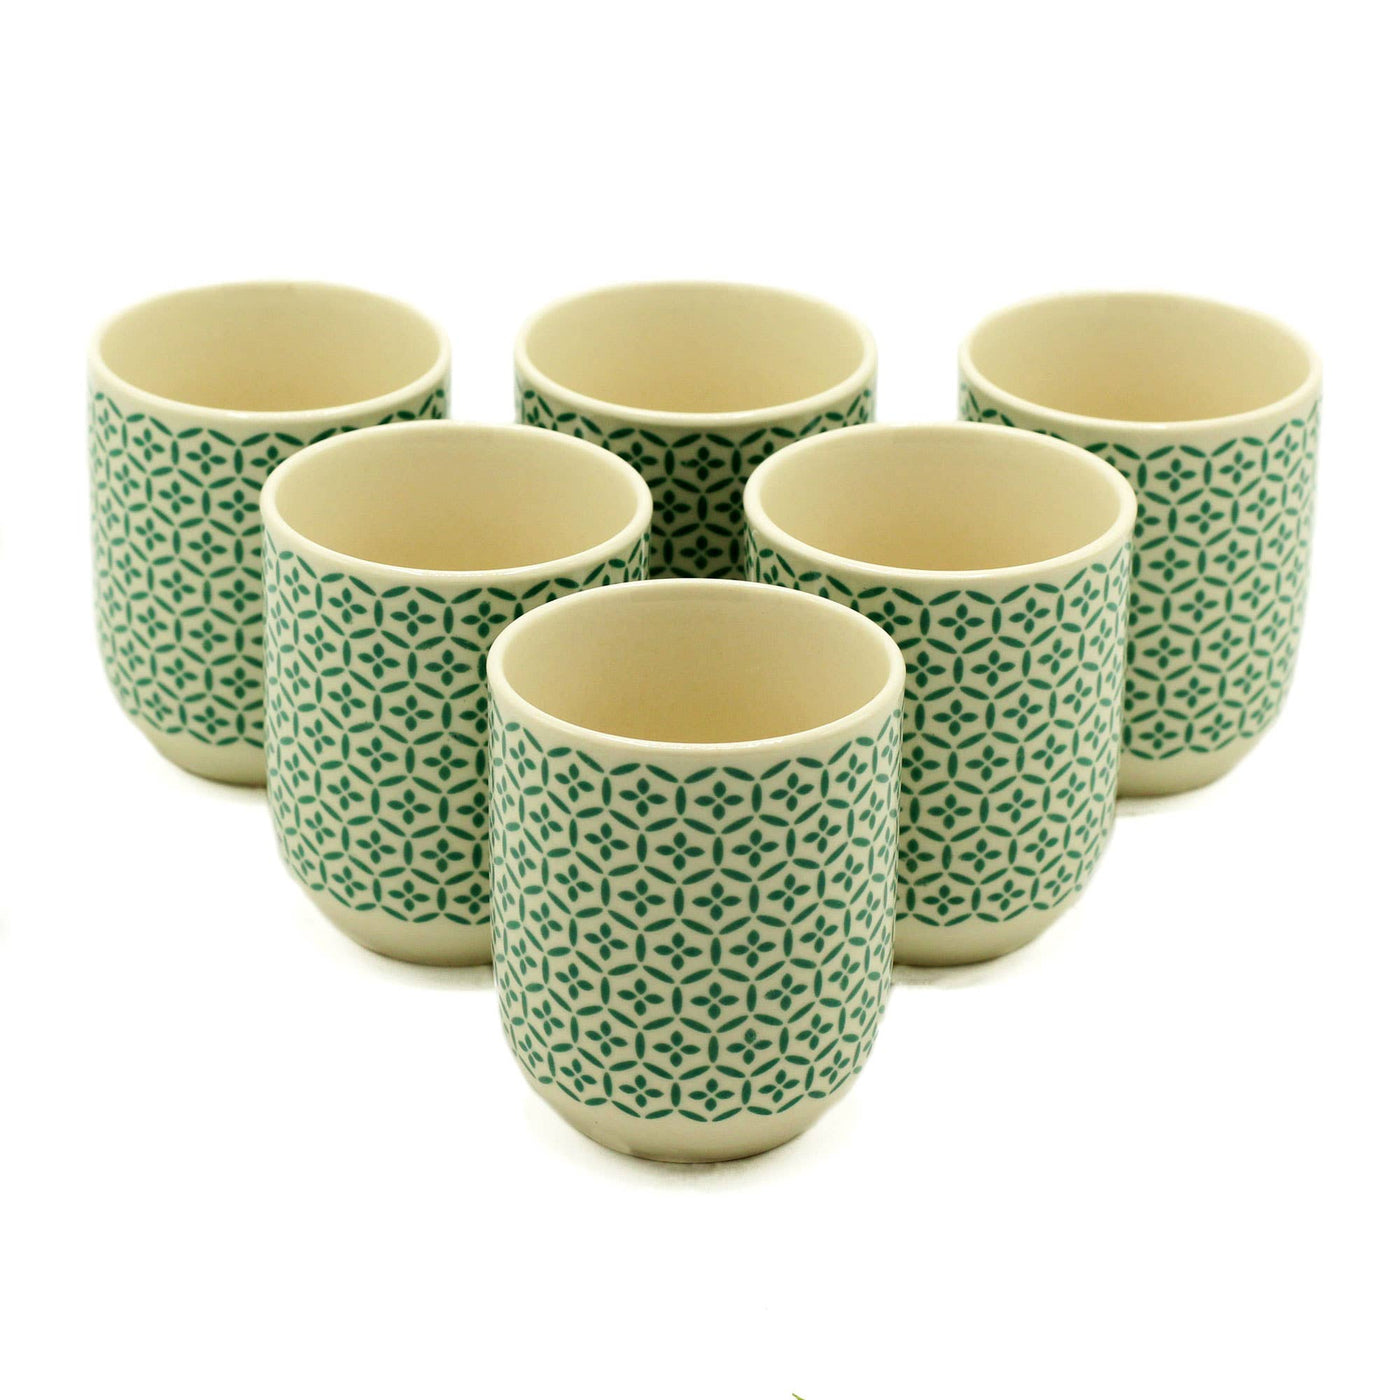 1 Herbal Tea Cup - Green Mosaic